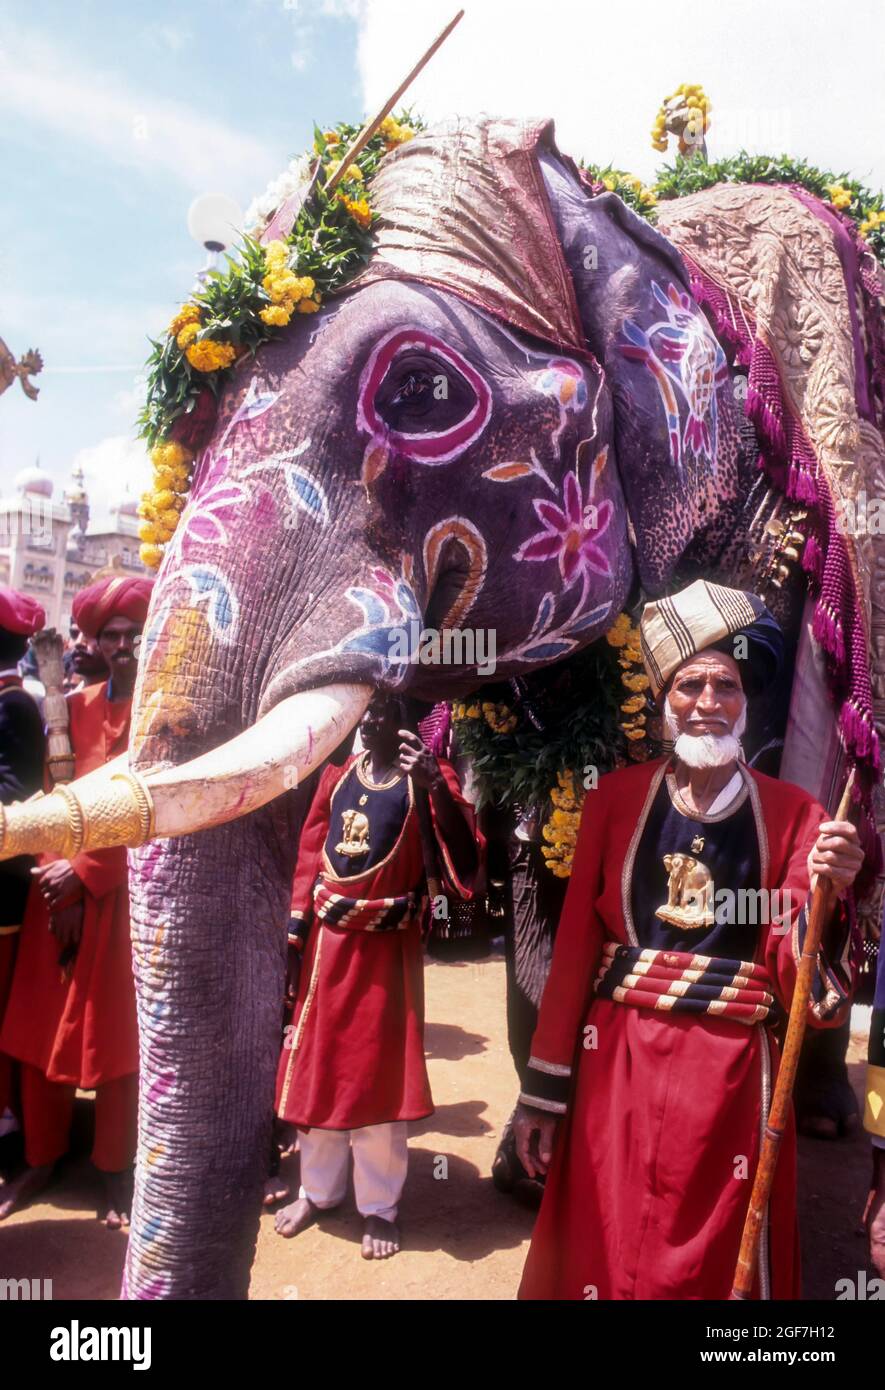 Caparisoned elephant, Dussera dusera festival at Mysuru; Mysore, Karnataka, India Stock Photo